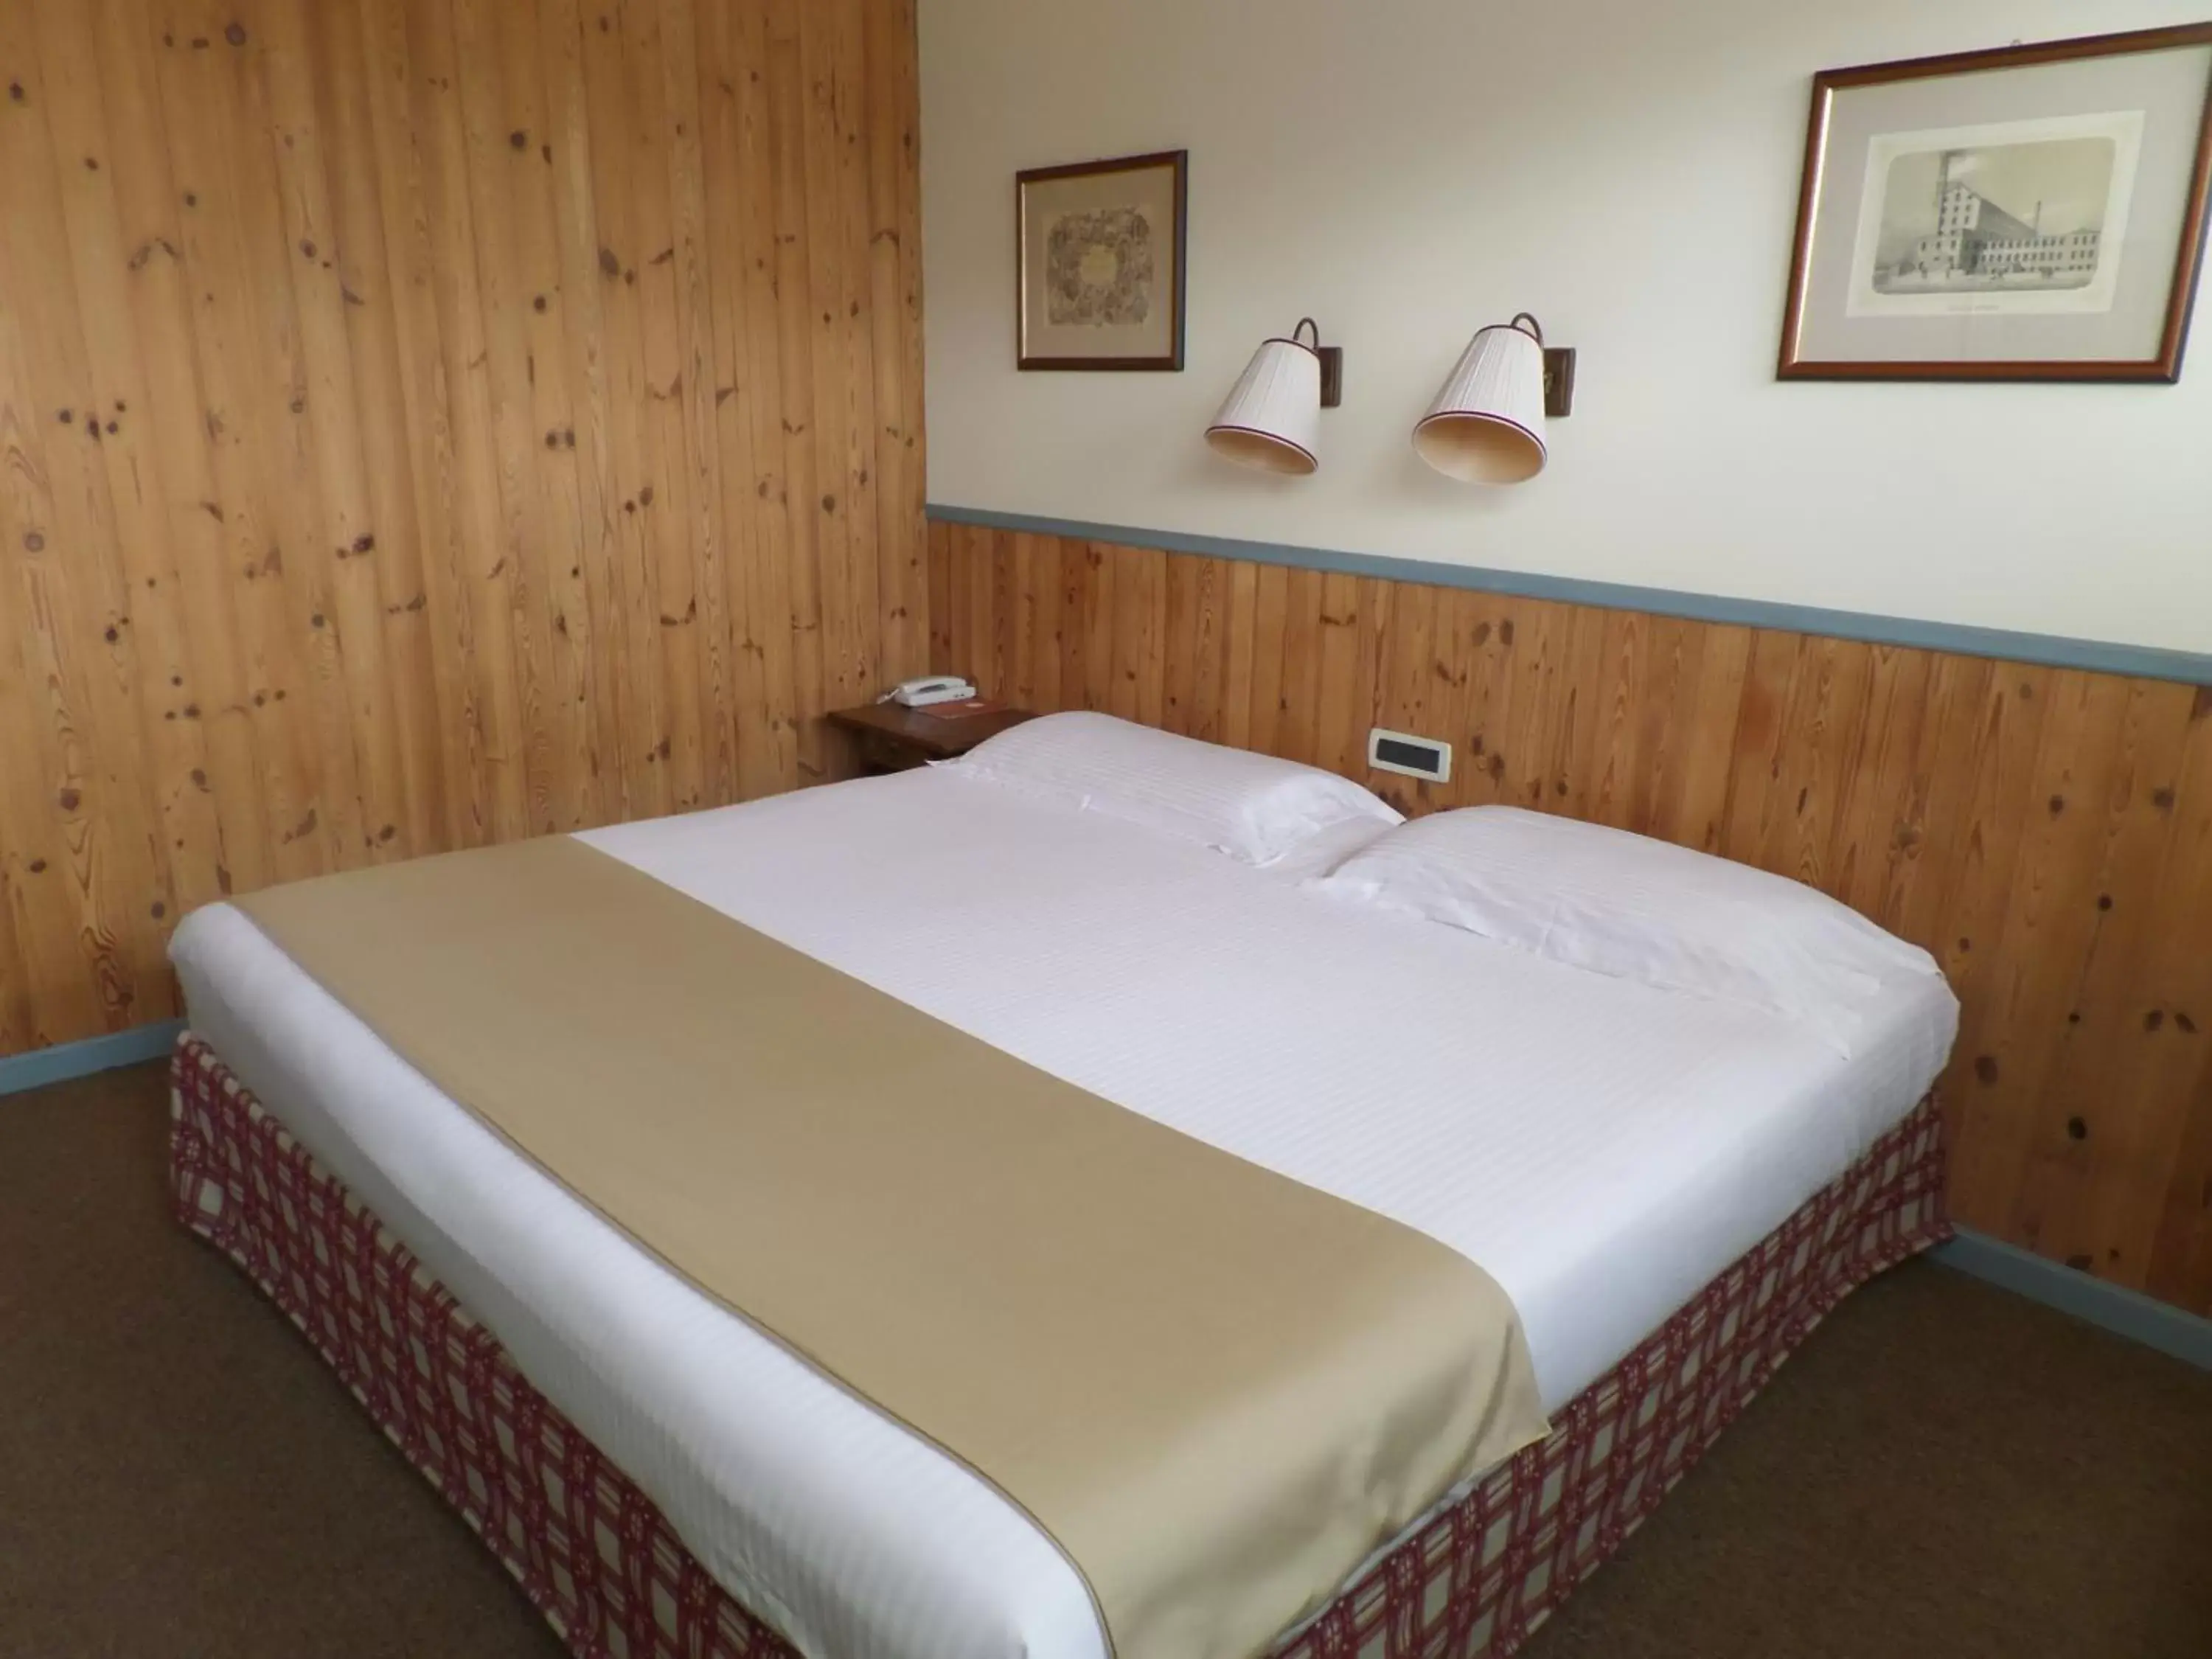 Bed, Room Photo in Hotel Miramonti